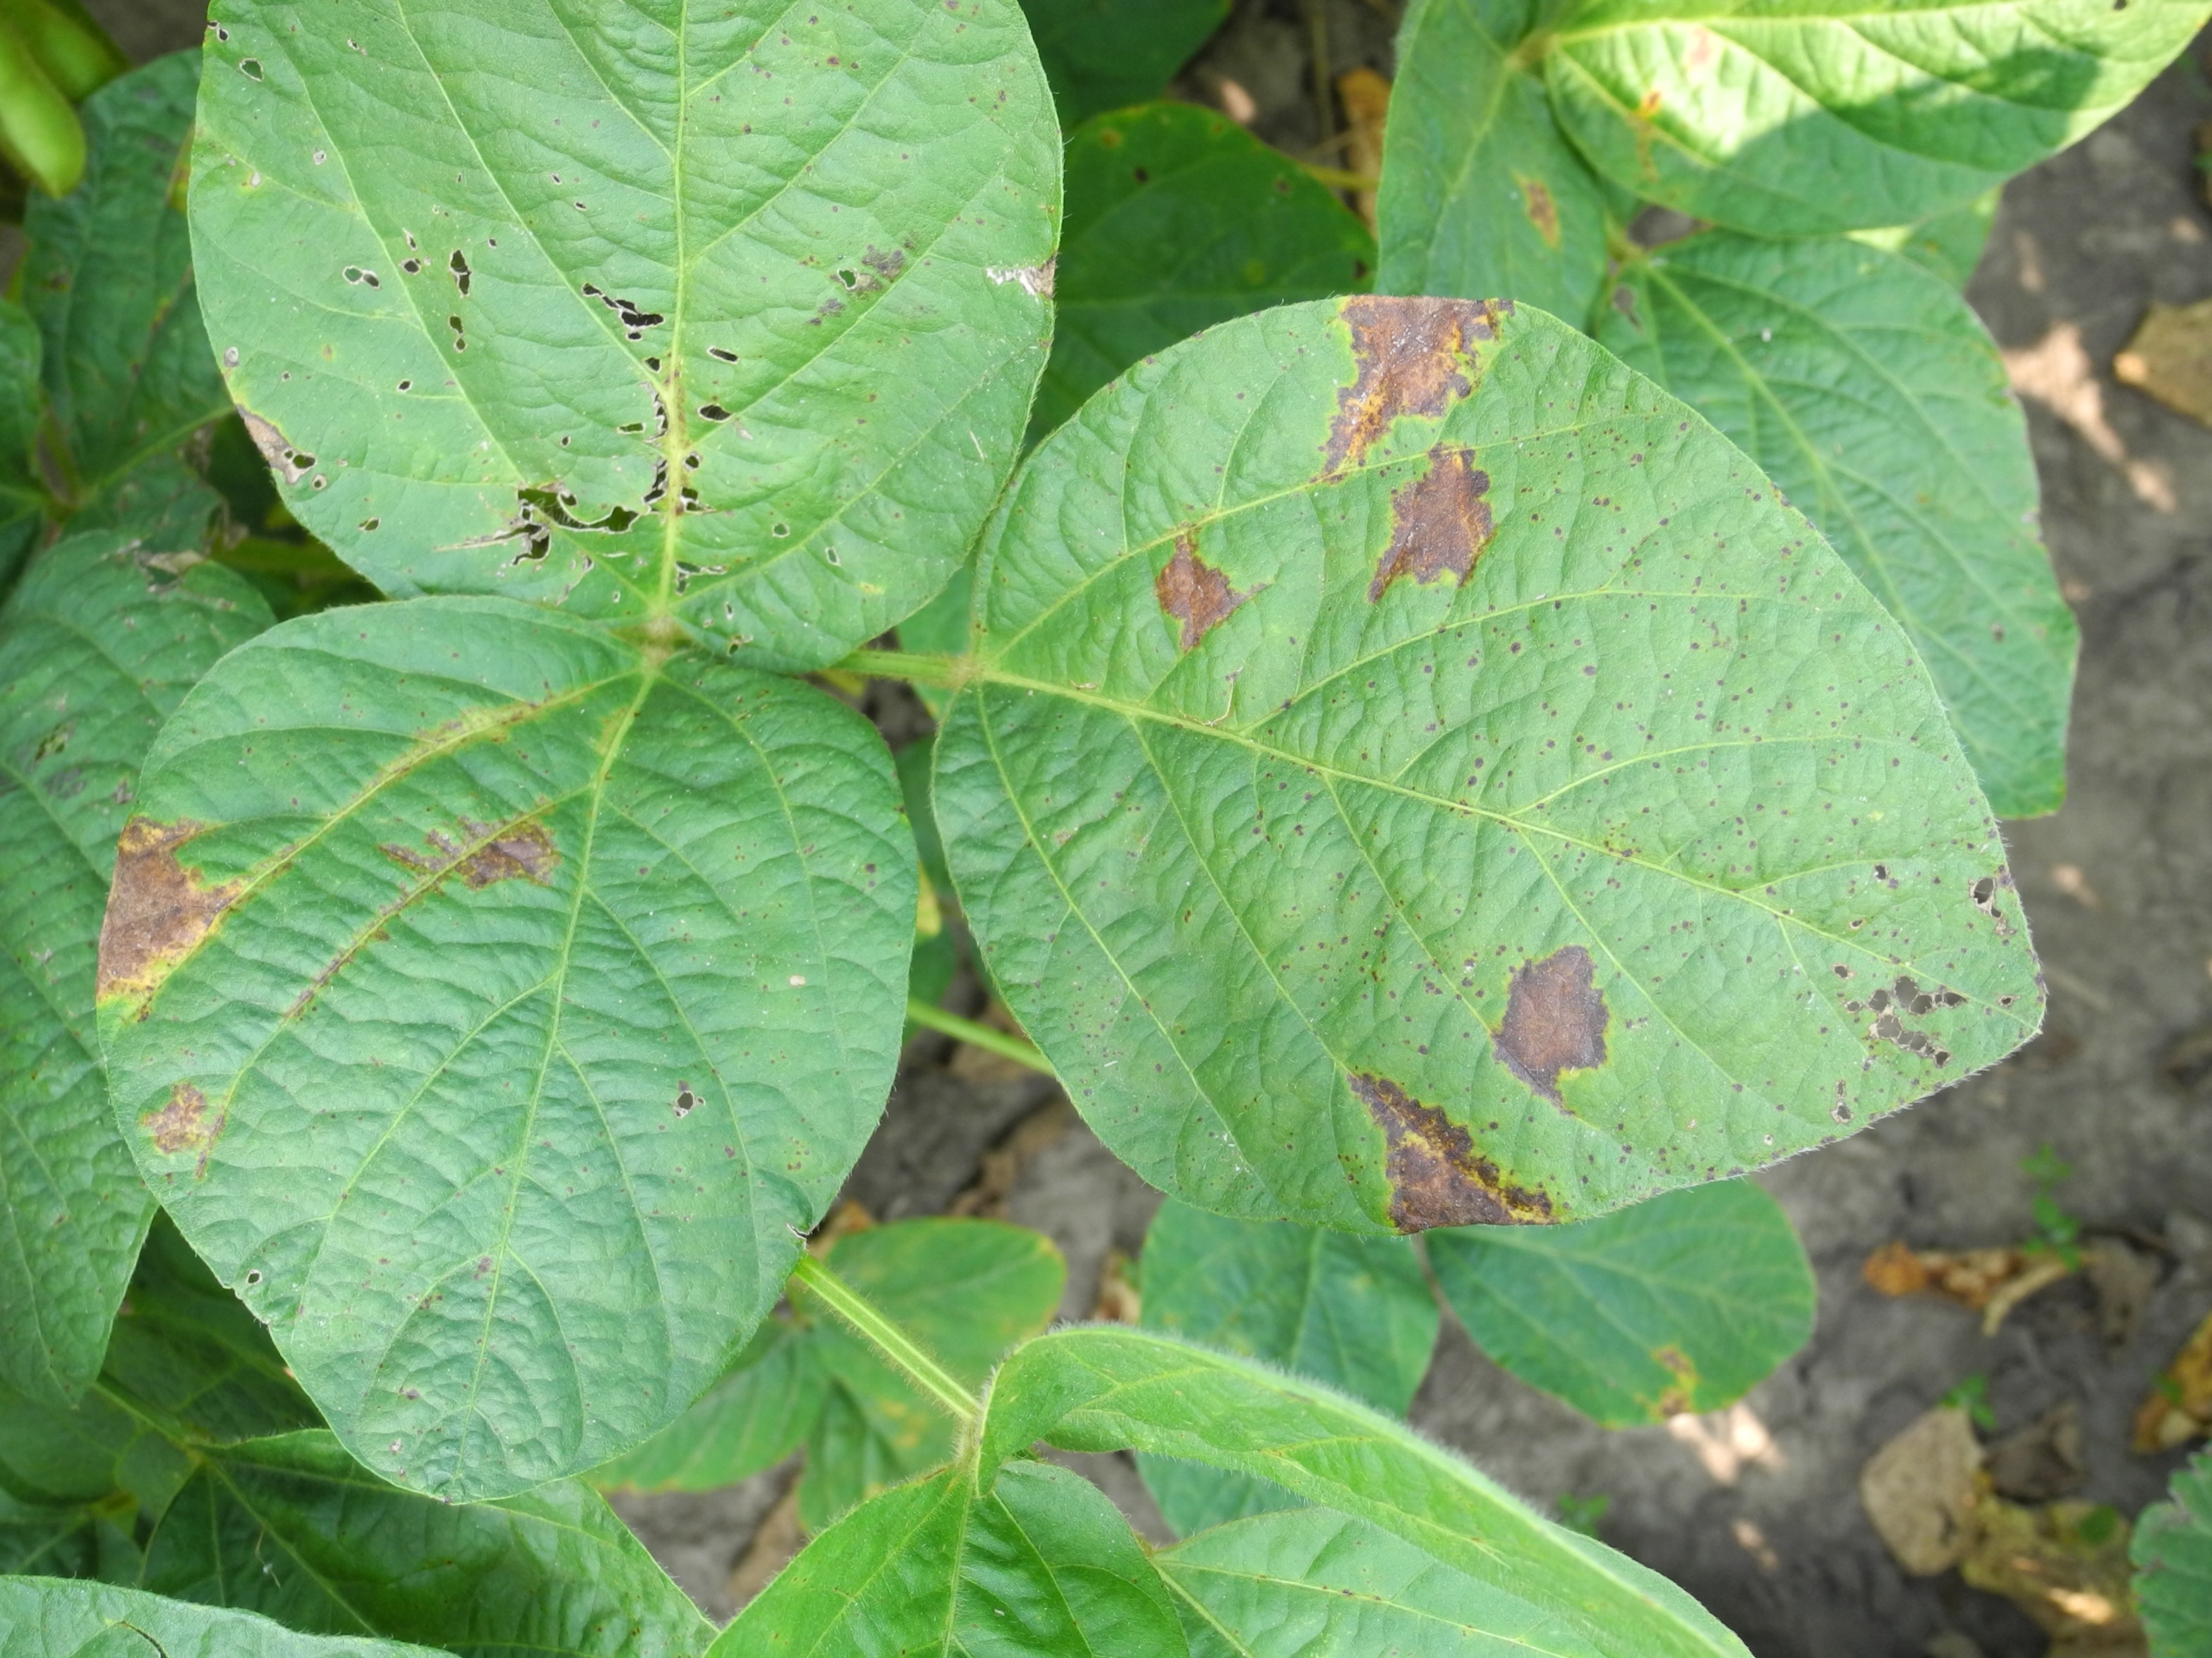 Symptoms of soybean vein necrosis on soybean leaves. 